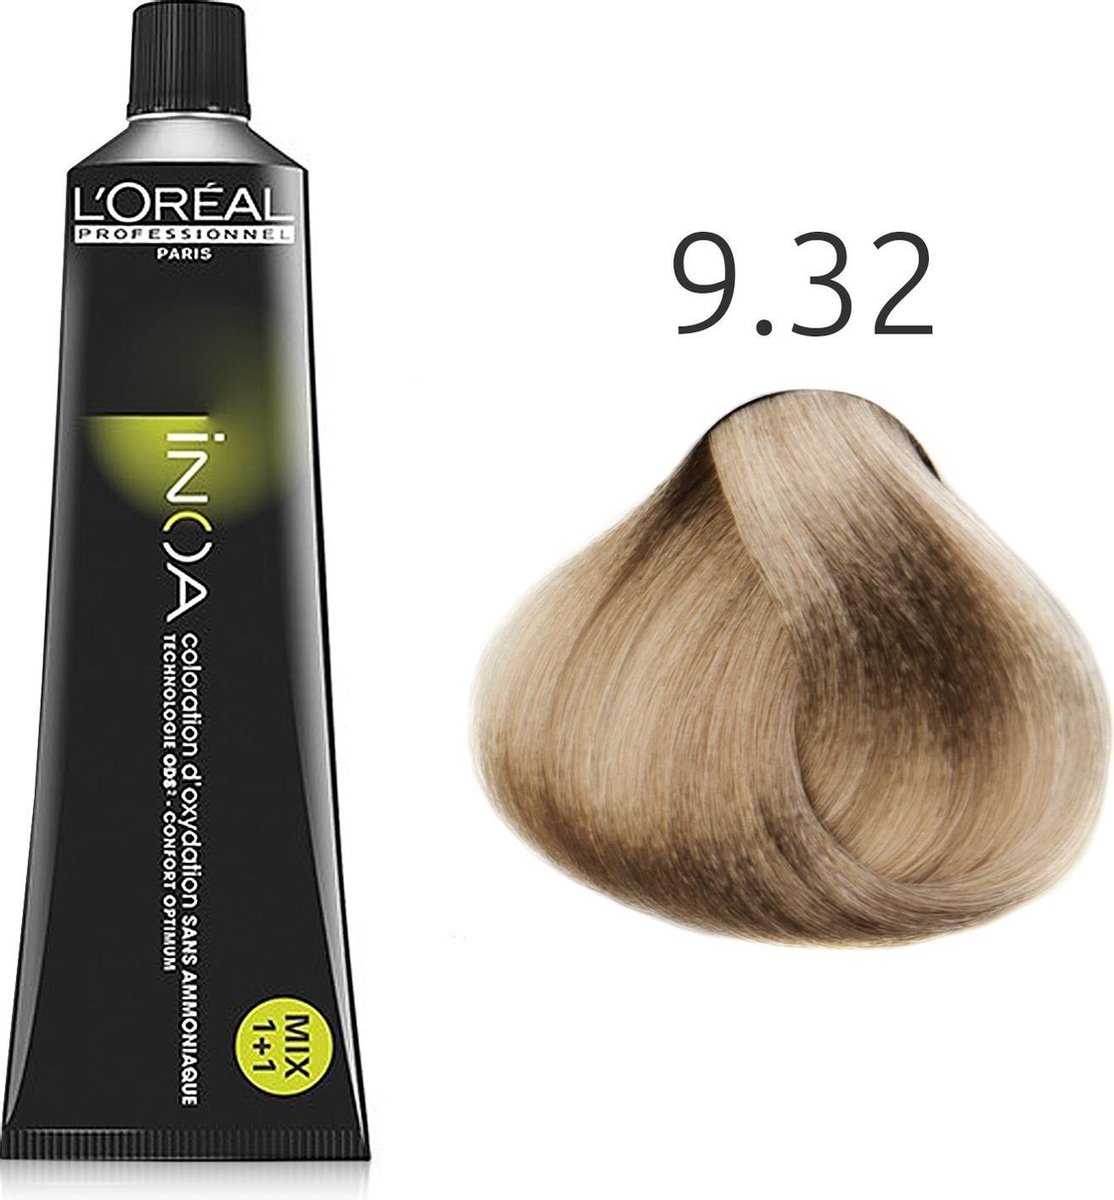 L'Oréal Paris (public) Inoa 9.32 haarkleuring Blond 60 ml | bol.com